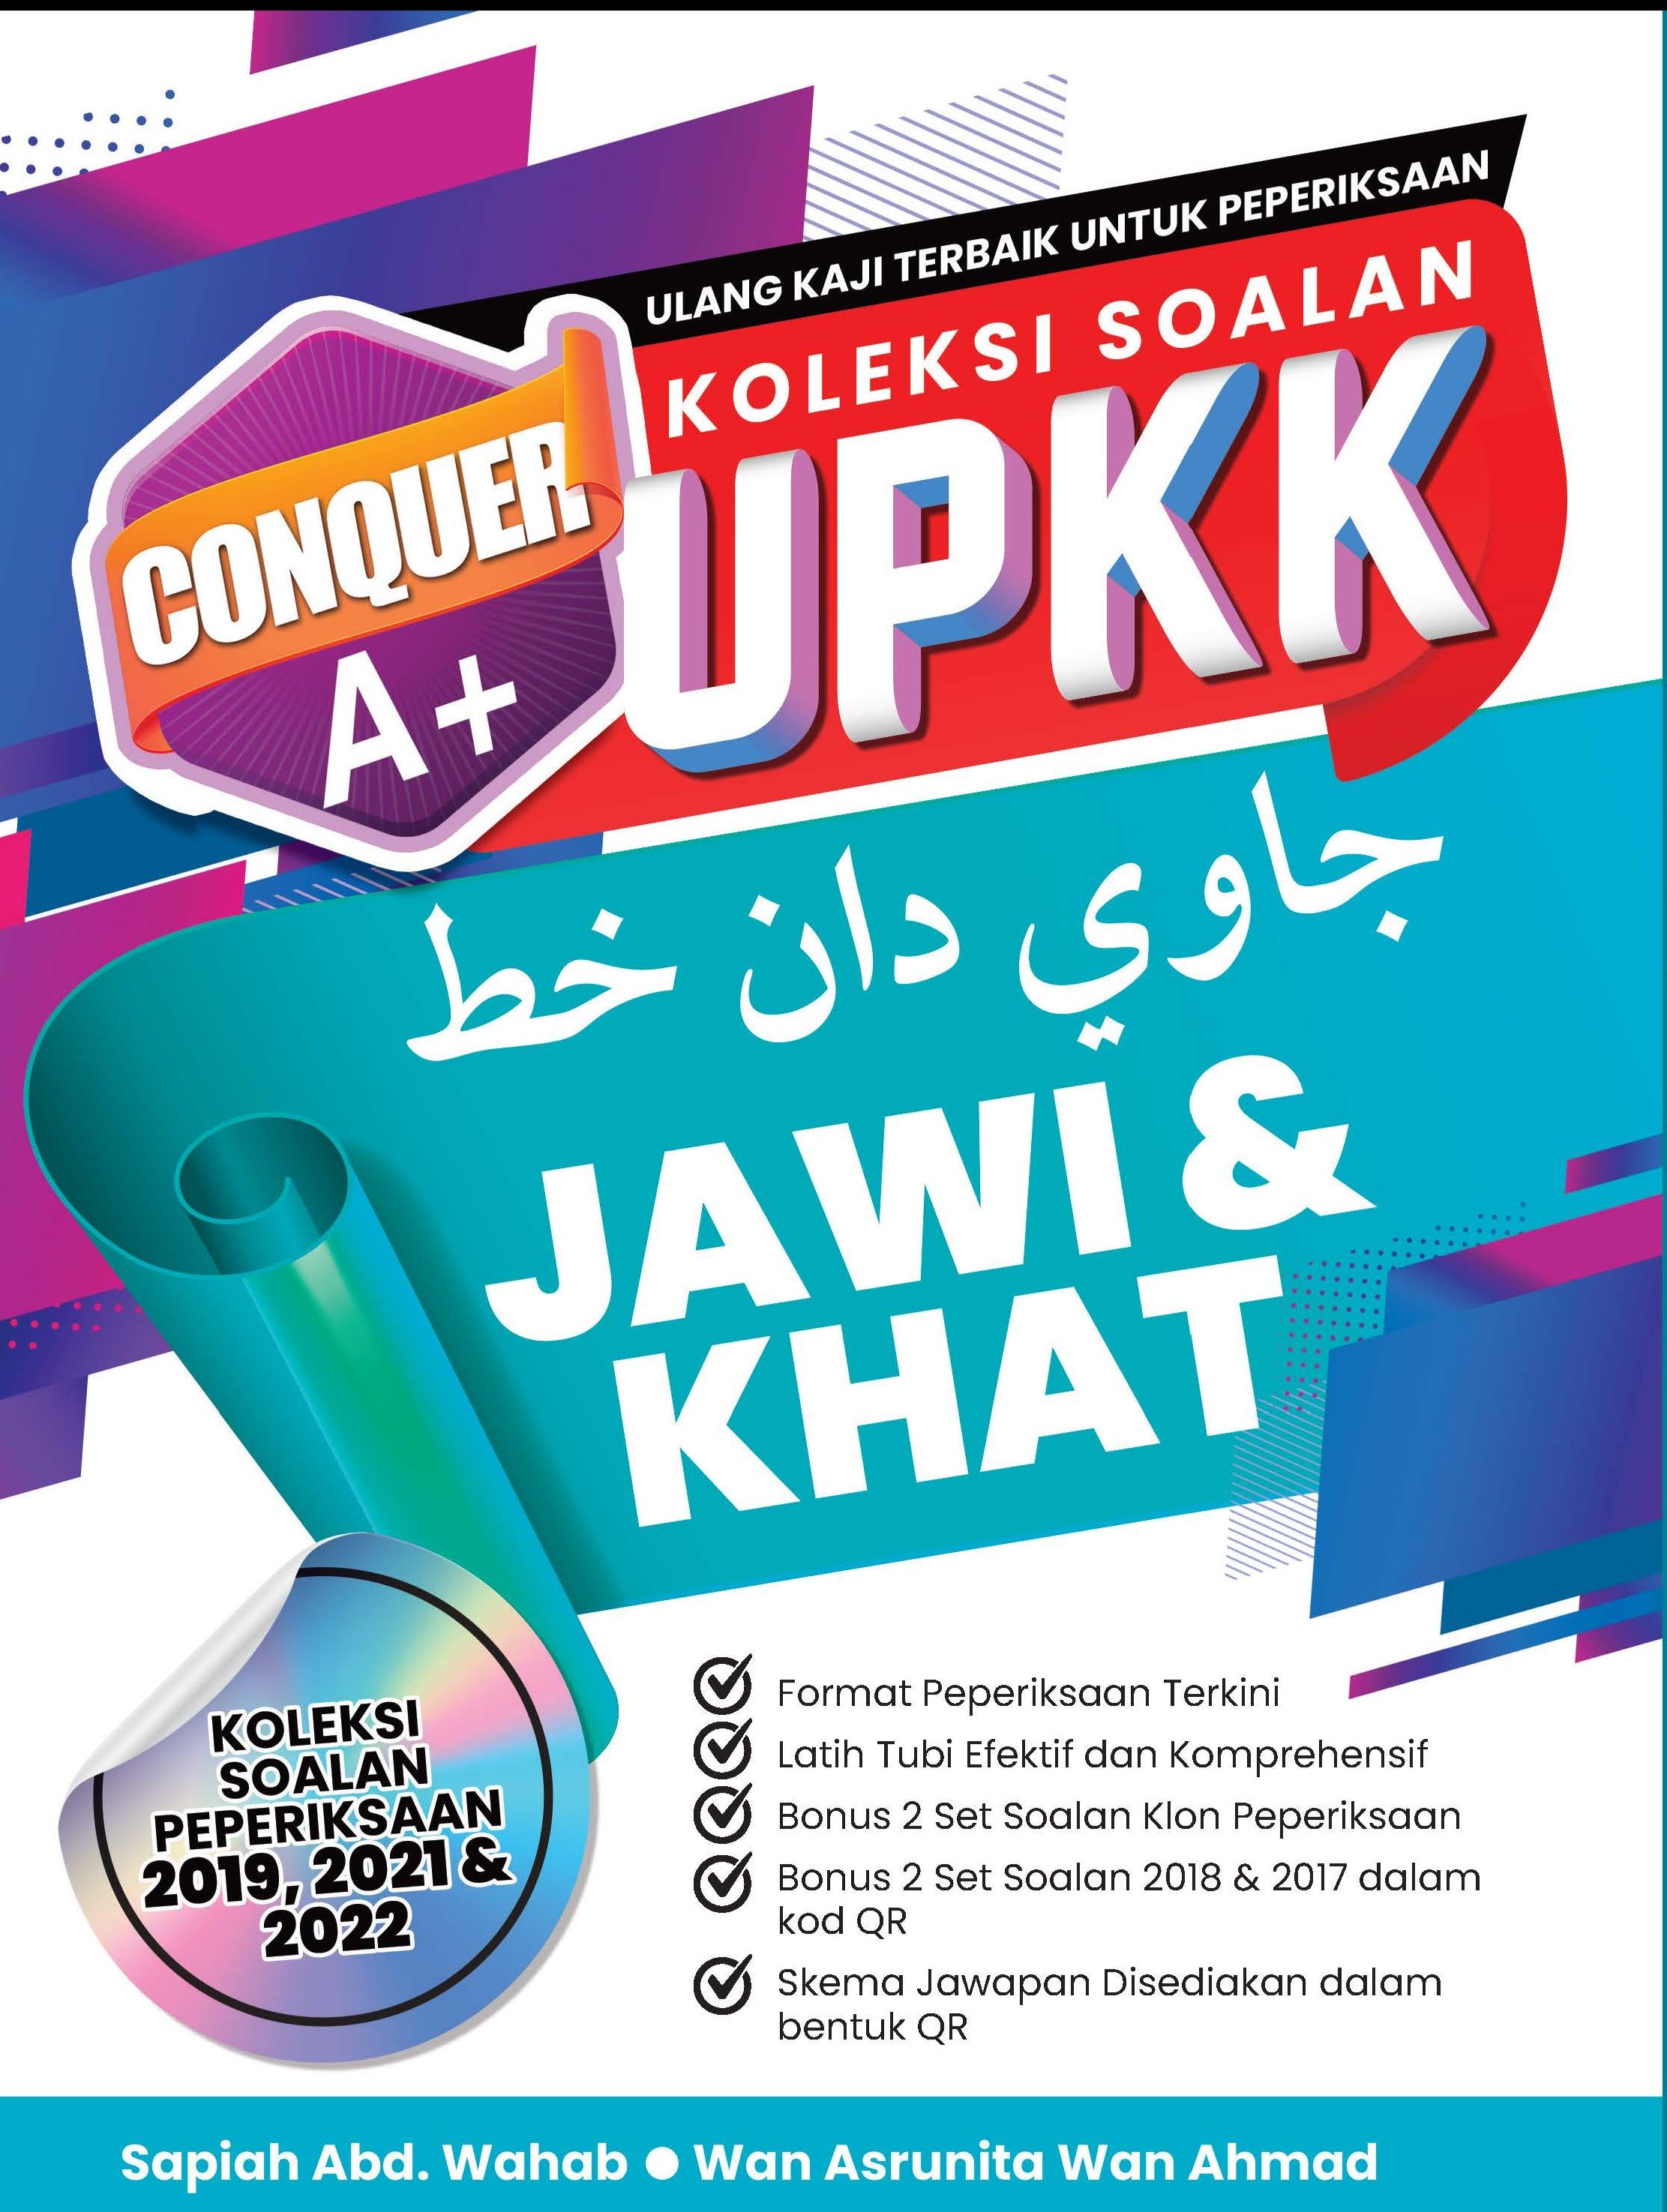 Conquer A+ Koleksi Soalan UPKK (Jawi & Khat) - (TBBS1317)